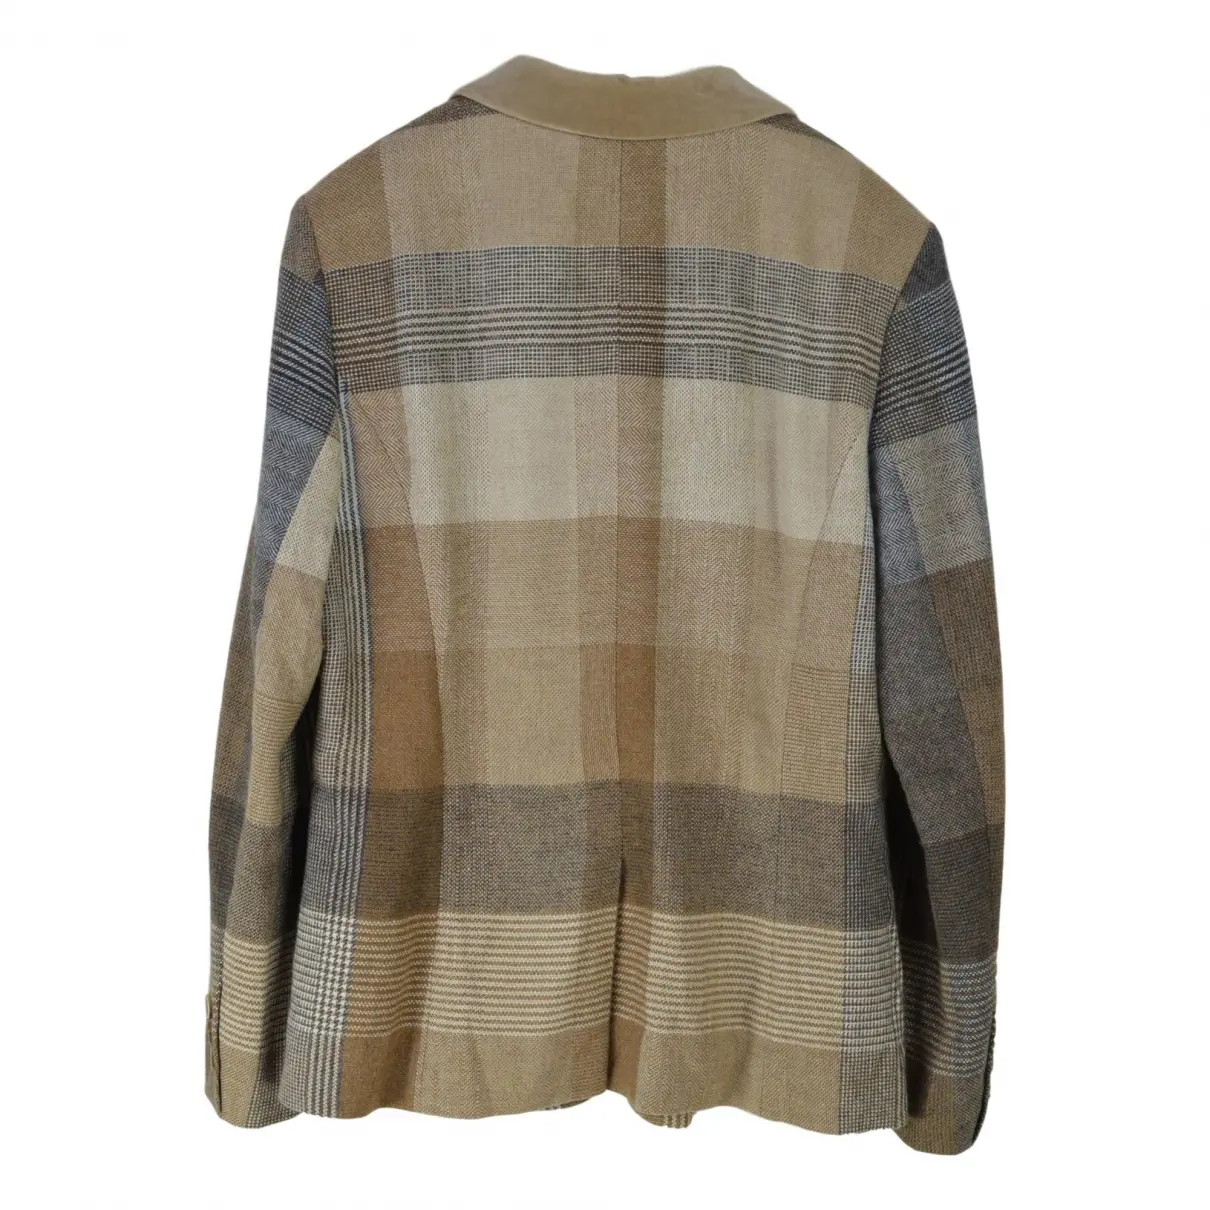 Buy Basler Wool jacket online